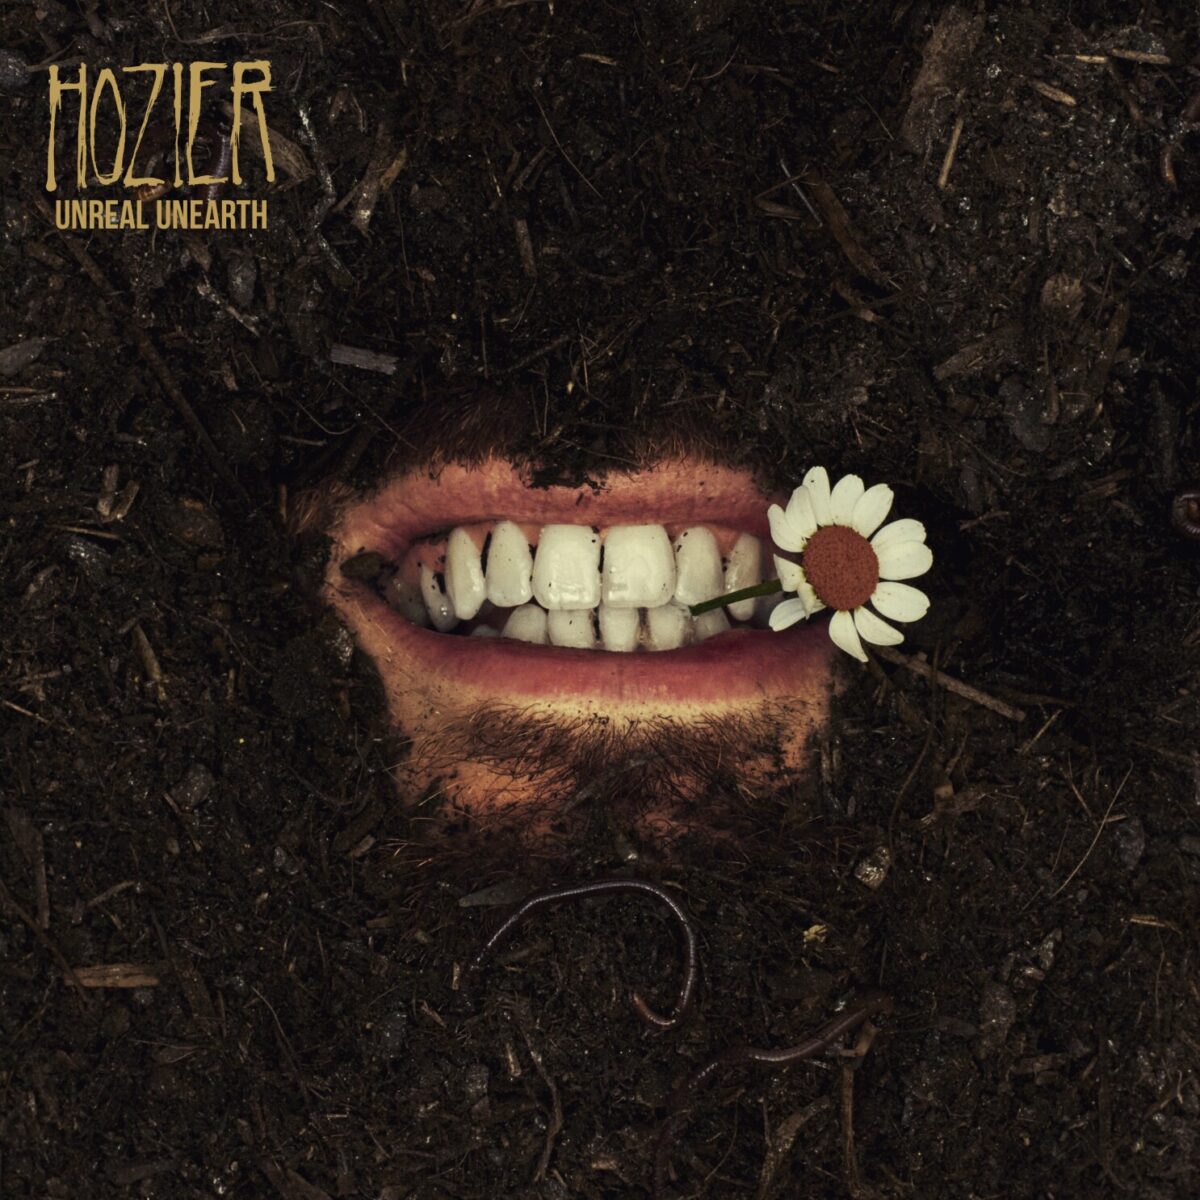 Hoziers+third+studio+album+Unreal+Unearth+was+released+on+August+18%2C+2023.